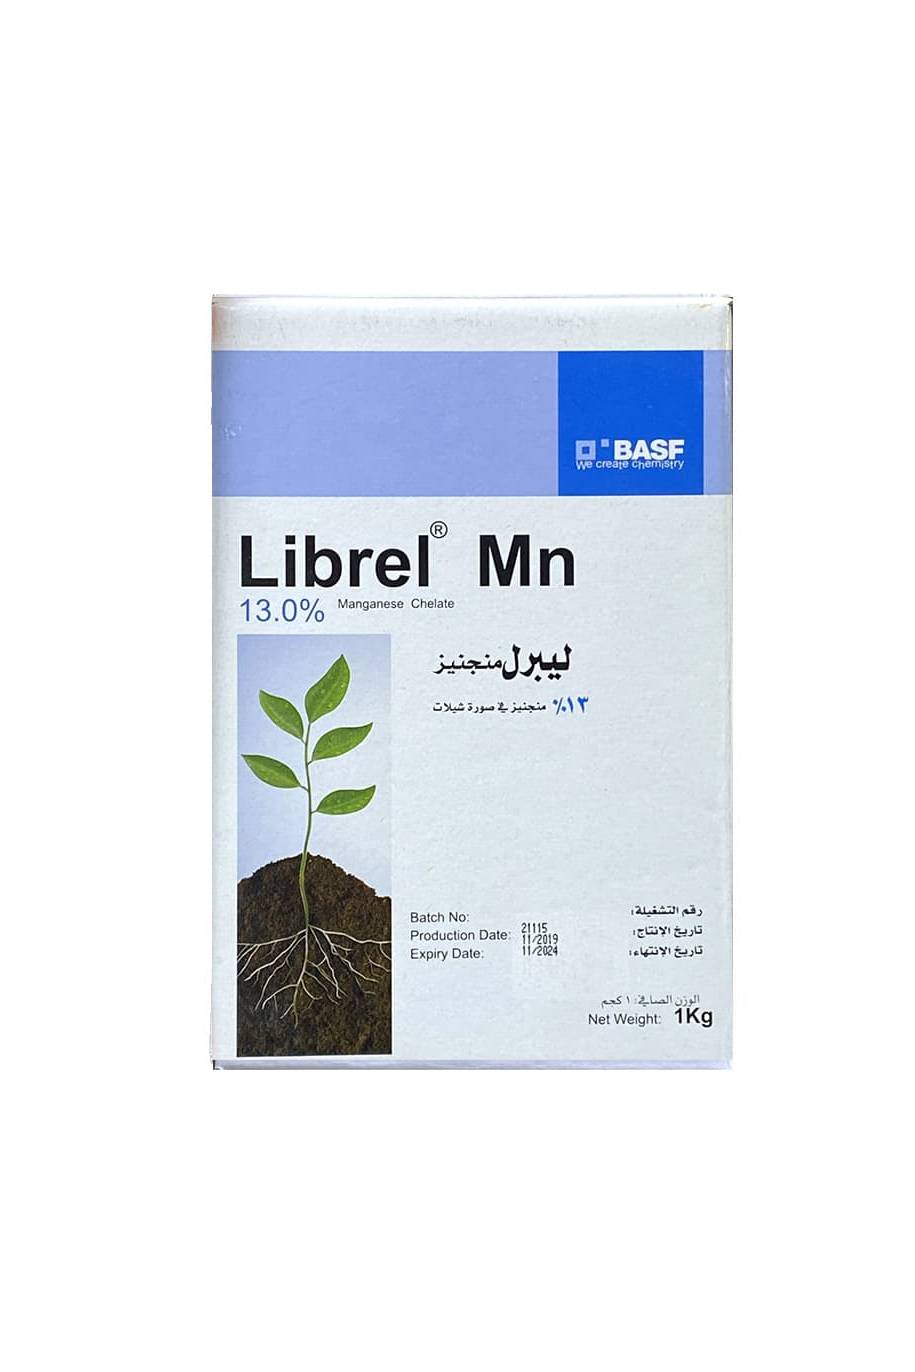 Librel Mn - Manganese Chelate